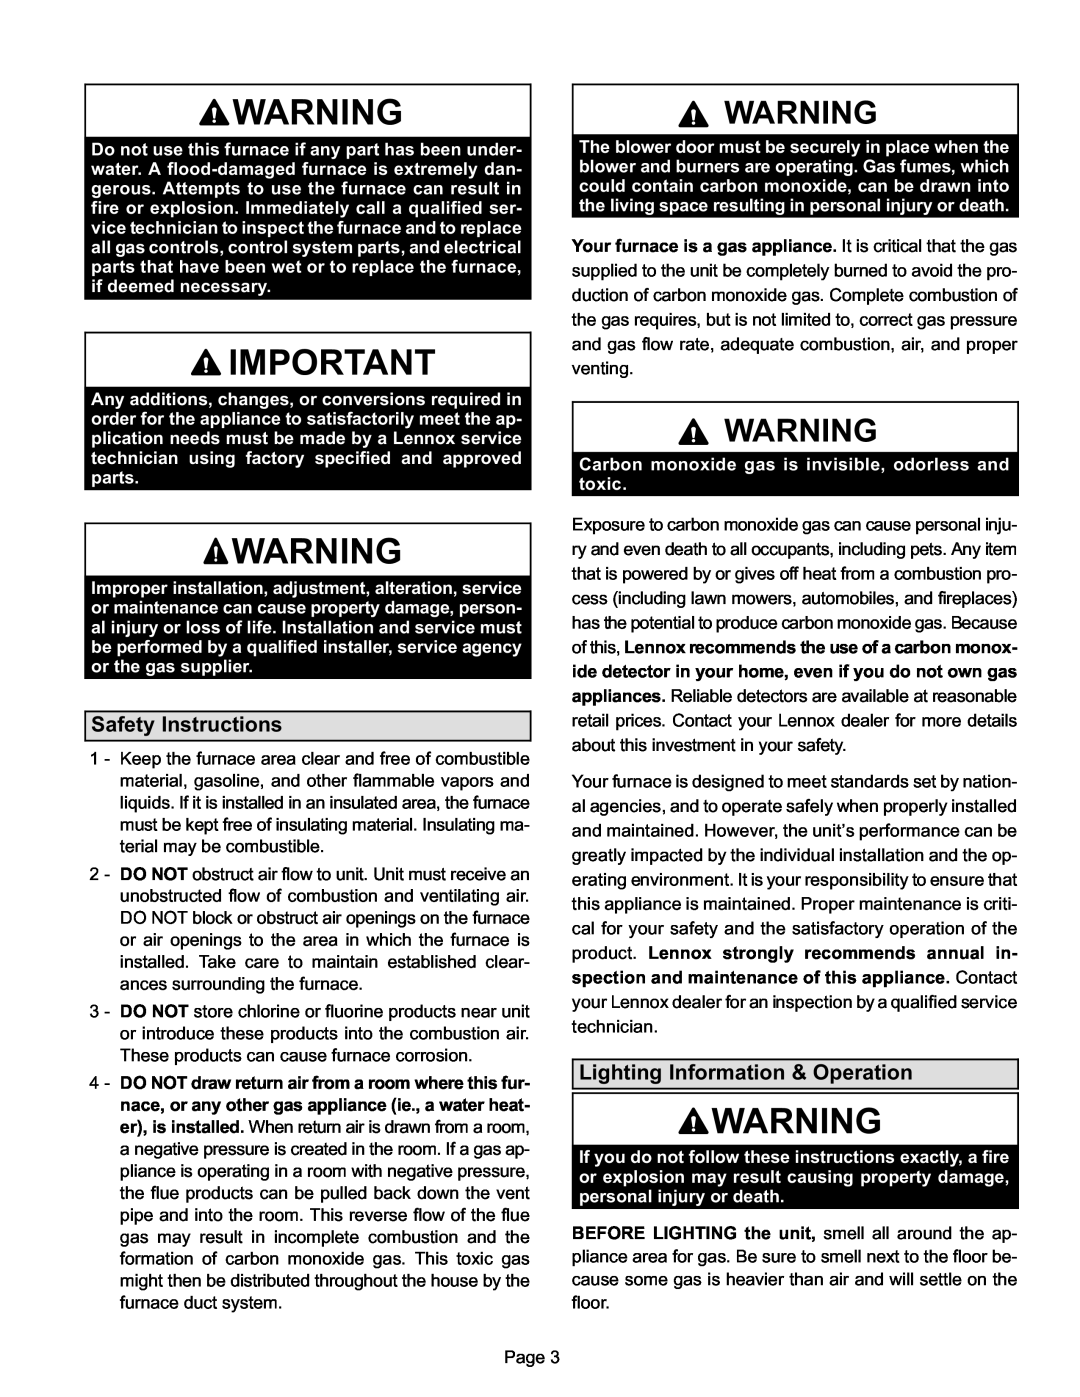 Lennox International Inc G43UF manual Safety Instructions, Lighting Information & Operation 